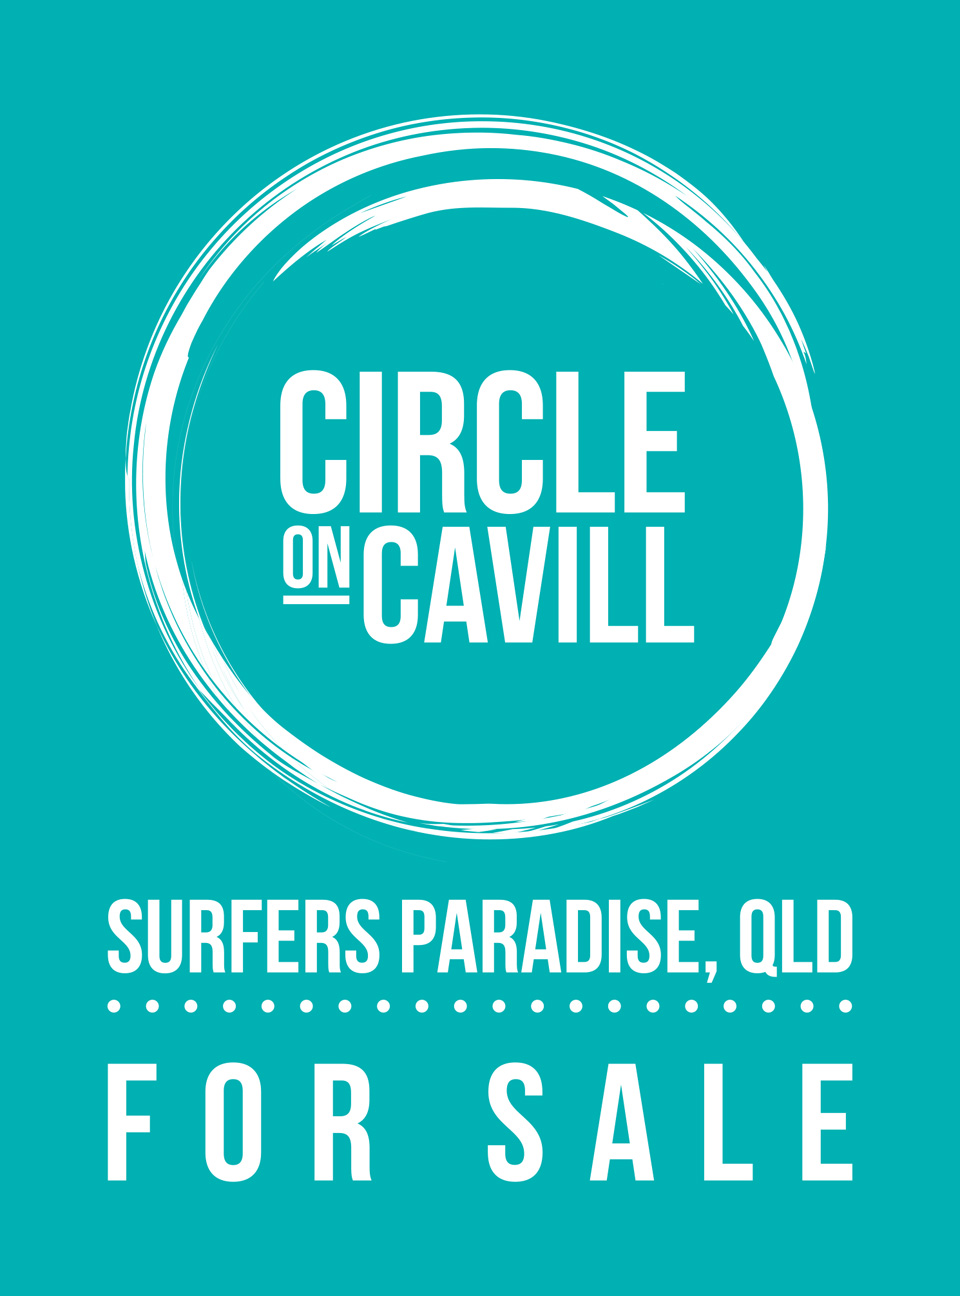 Circle on Cavill, Surfers Paradise, Qld